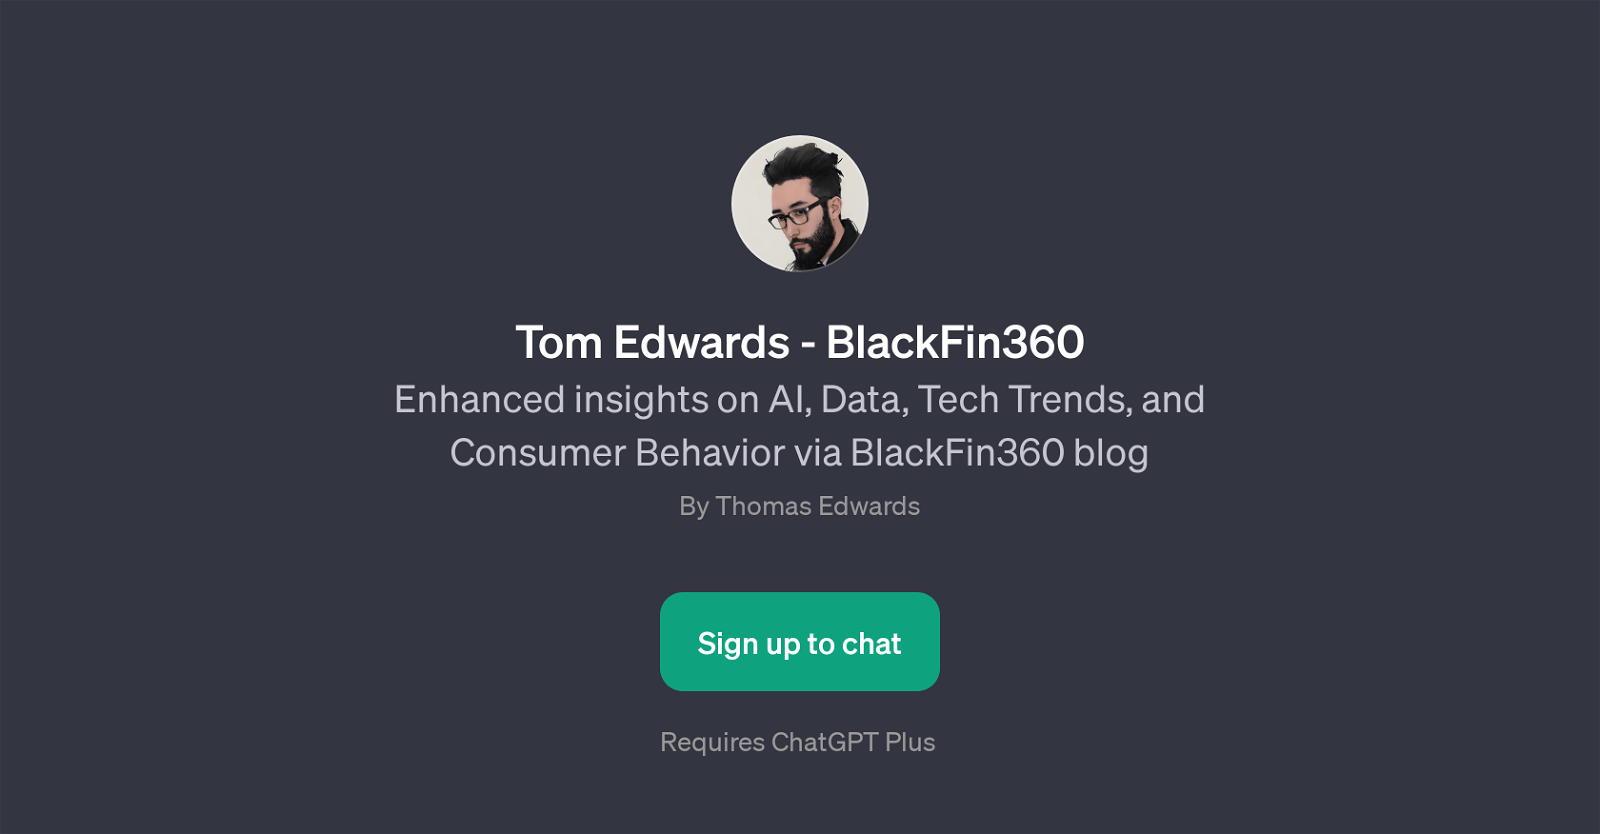 Tom Edwards - BlackFin360 website